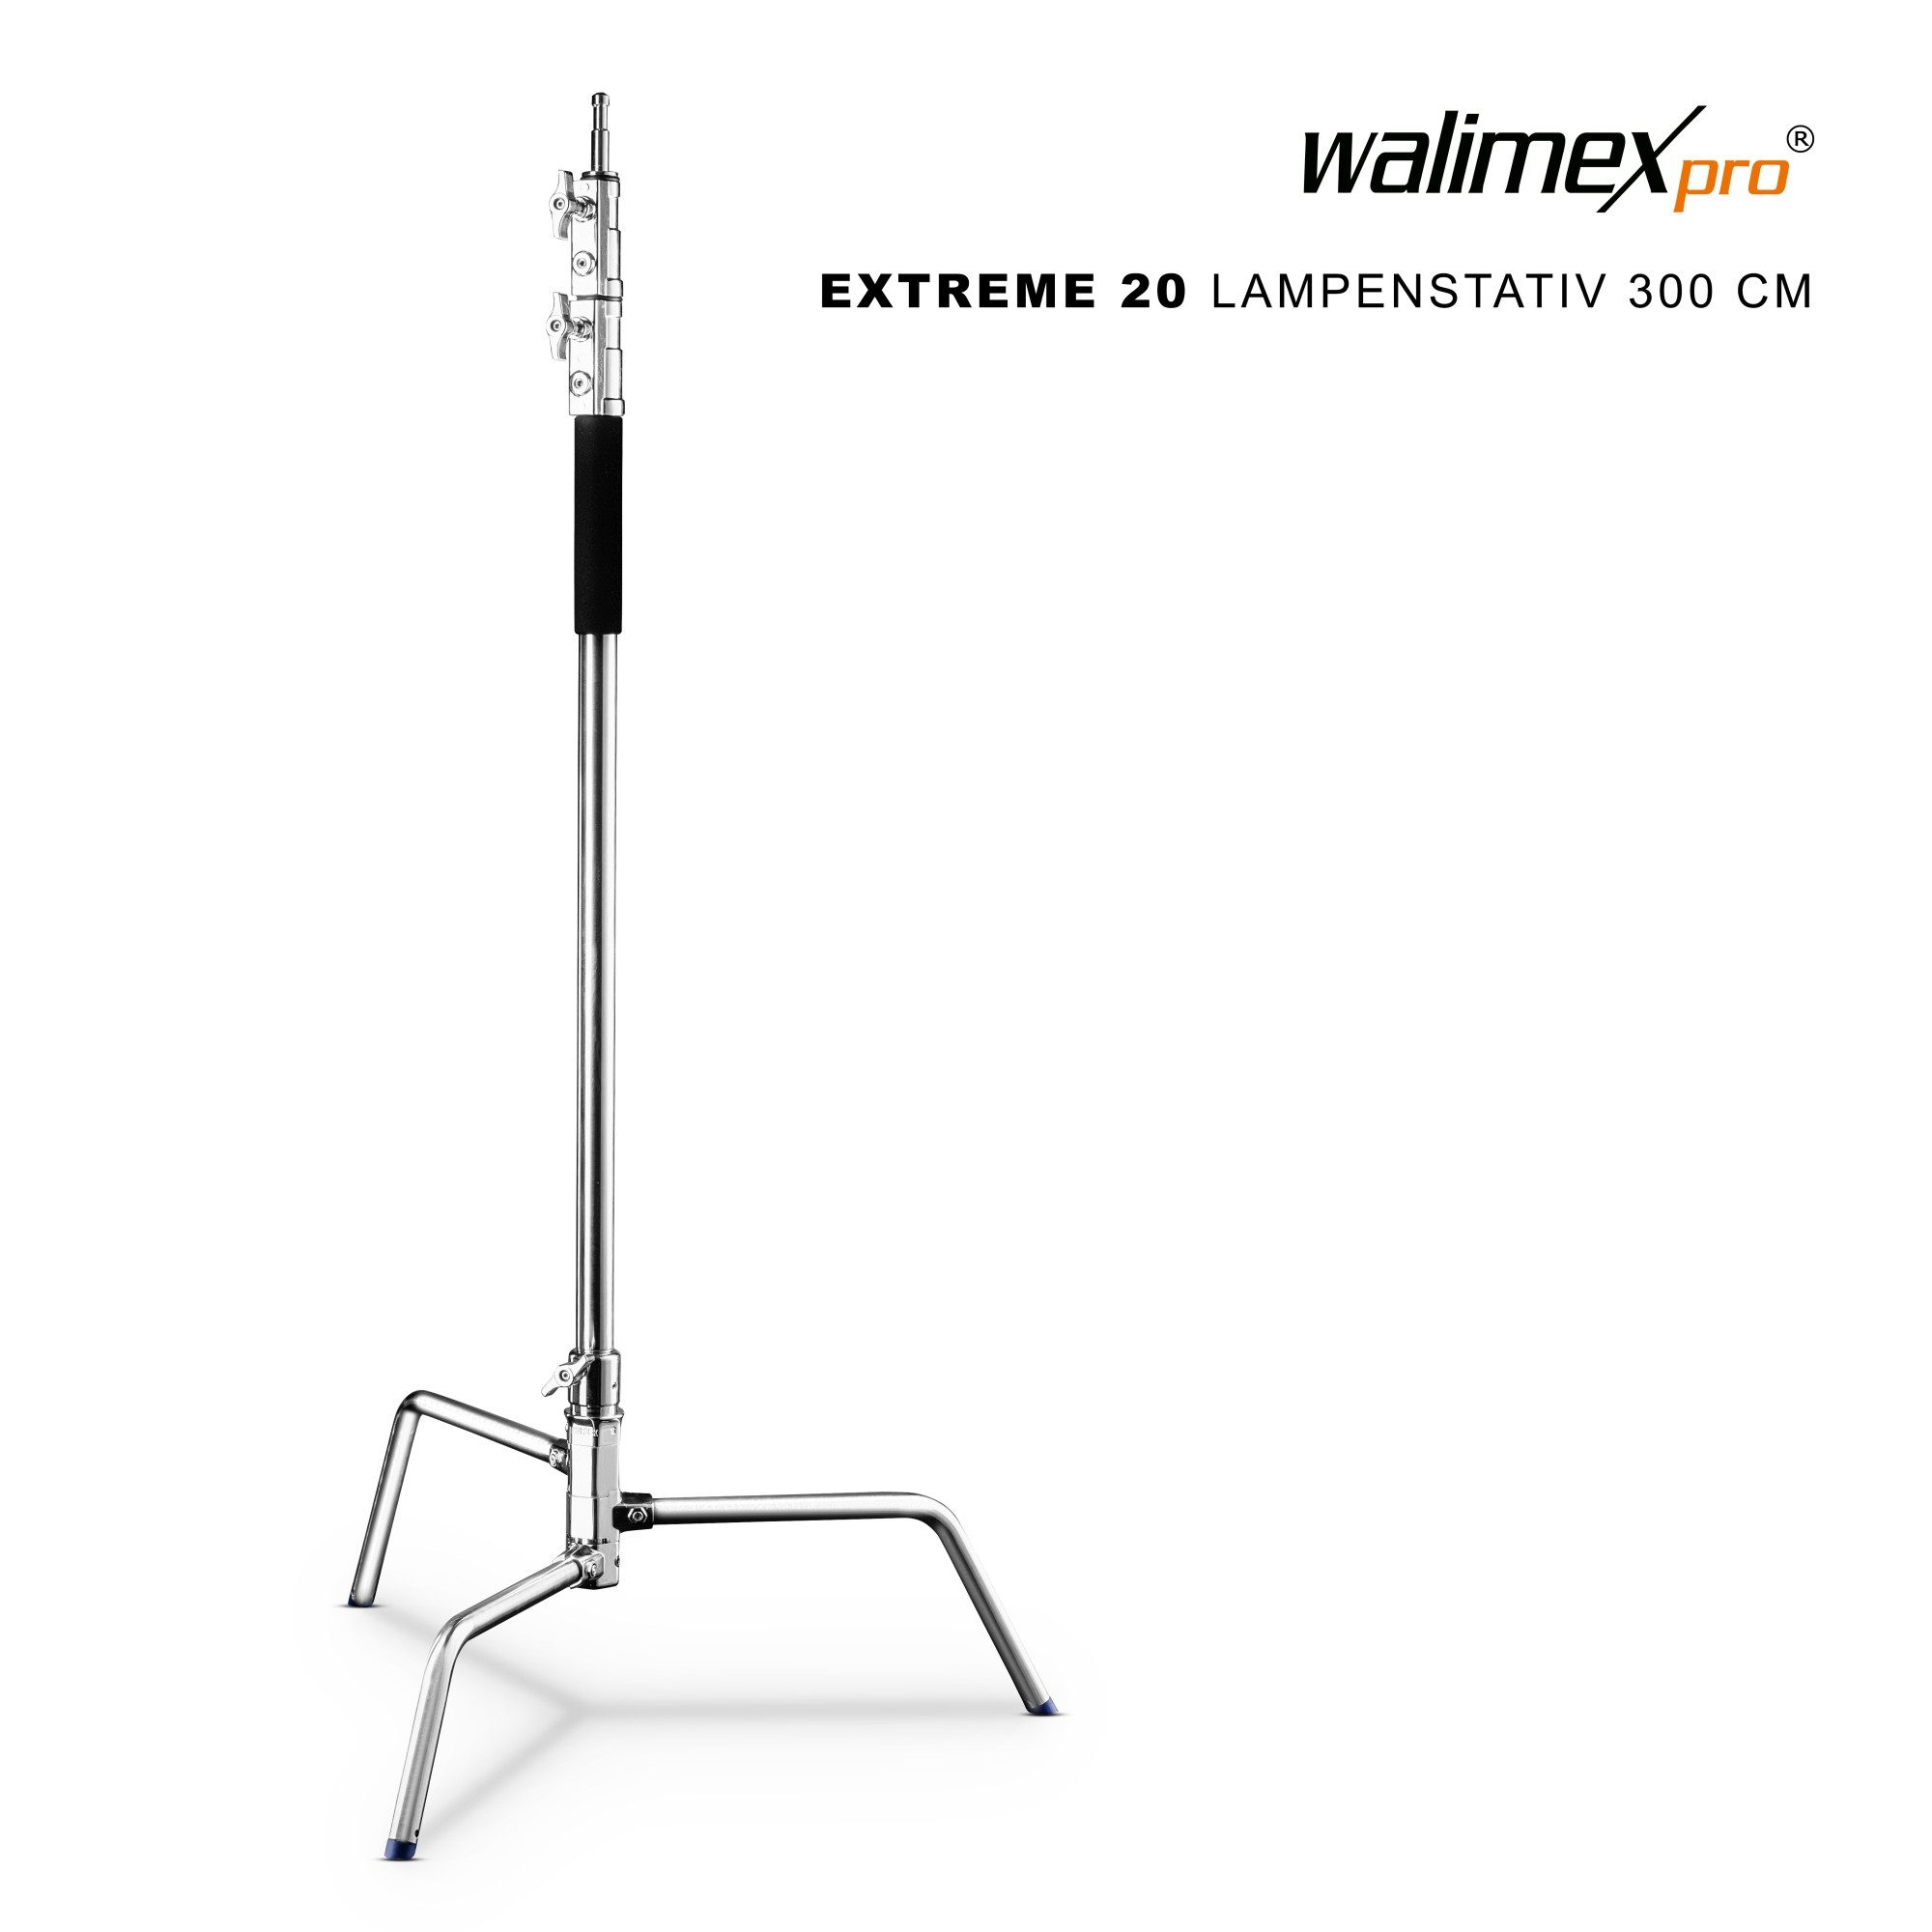 Walimex Pro Extreme 20 Lampenstativ 300 cm Lampenstativ